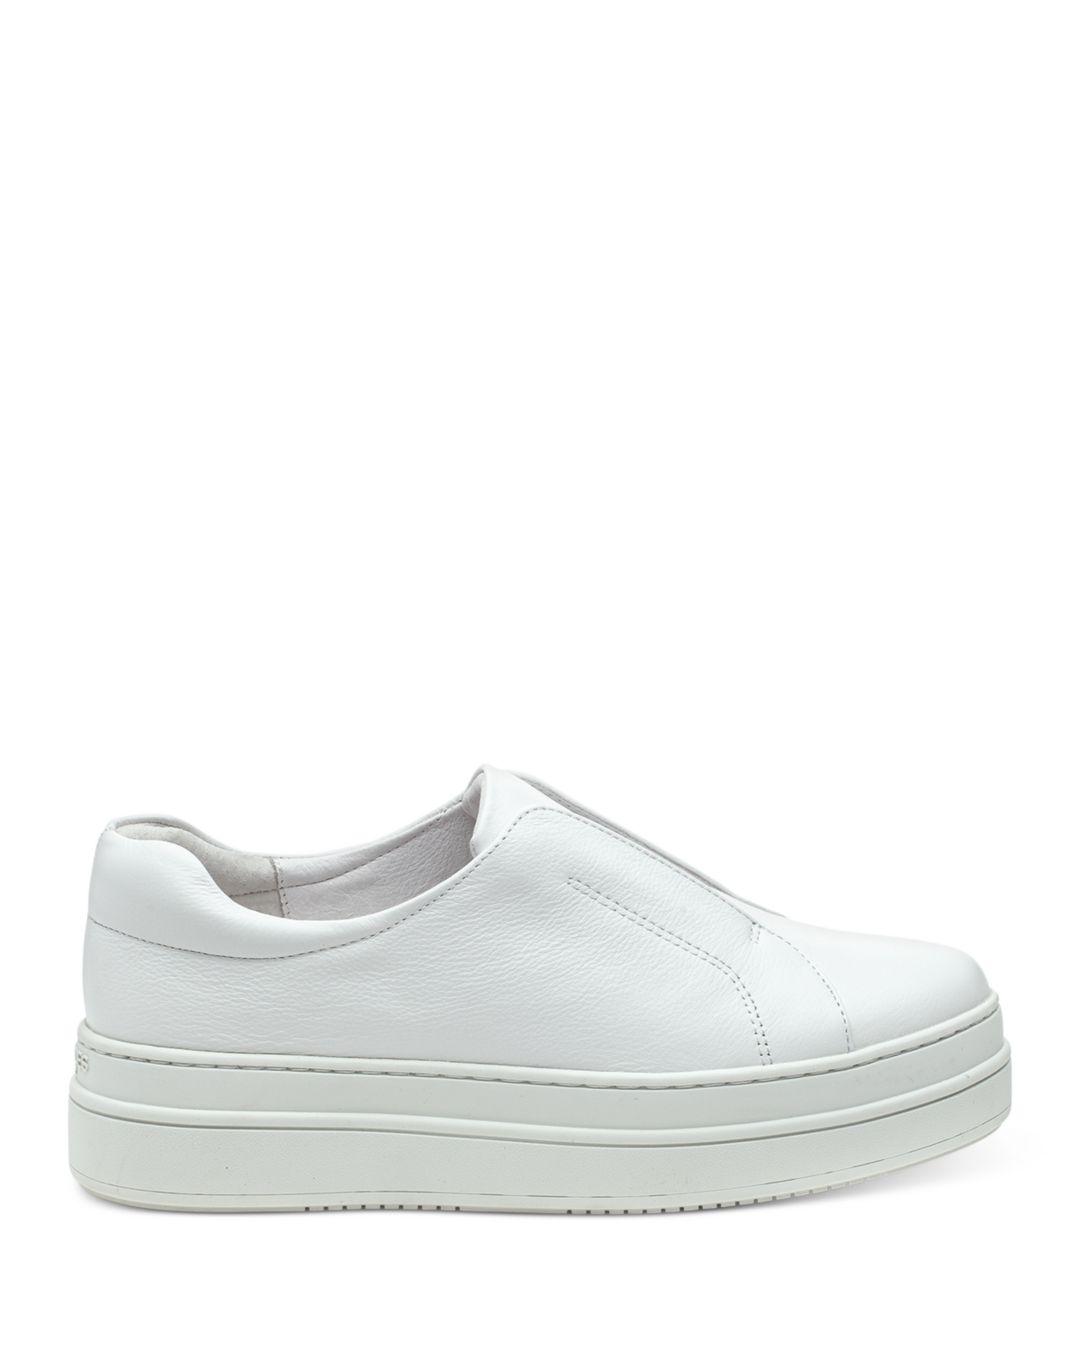 J/Slides Noel Nubuck Leather Slip On Platform Sneakers in White | Lyst